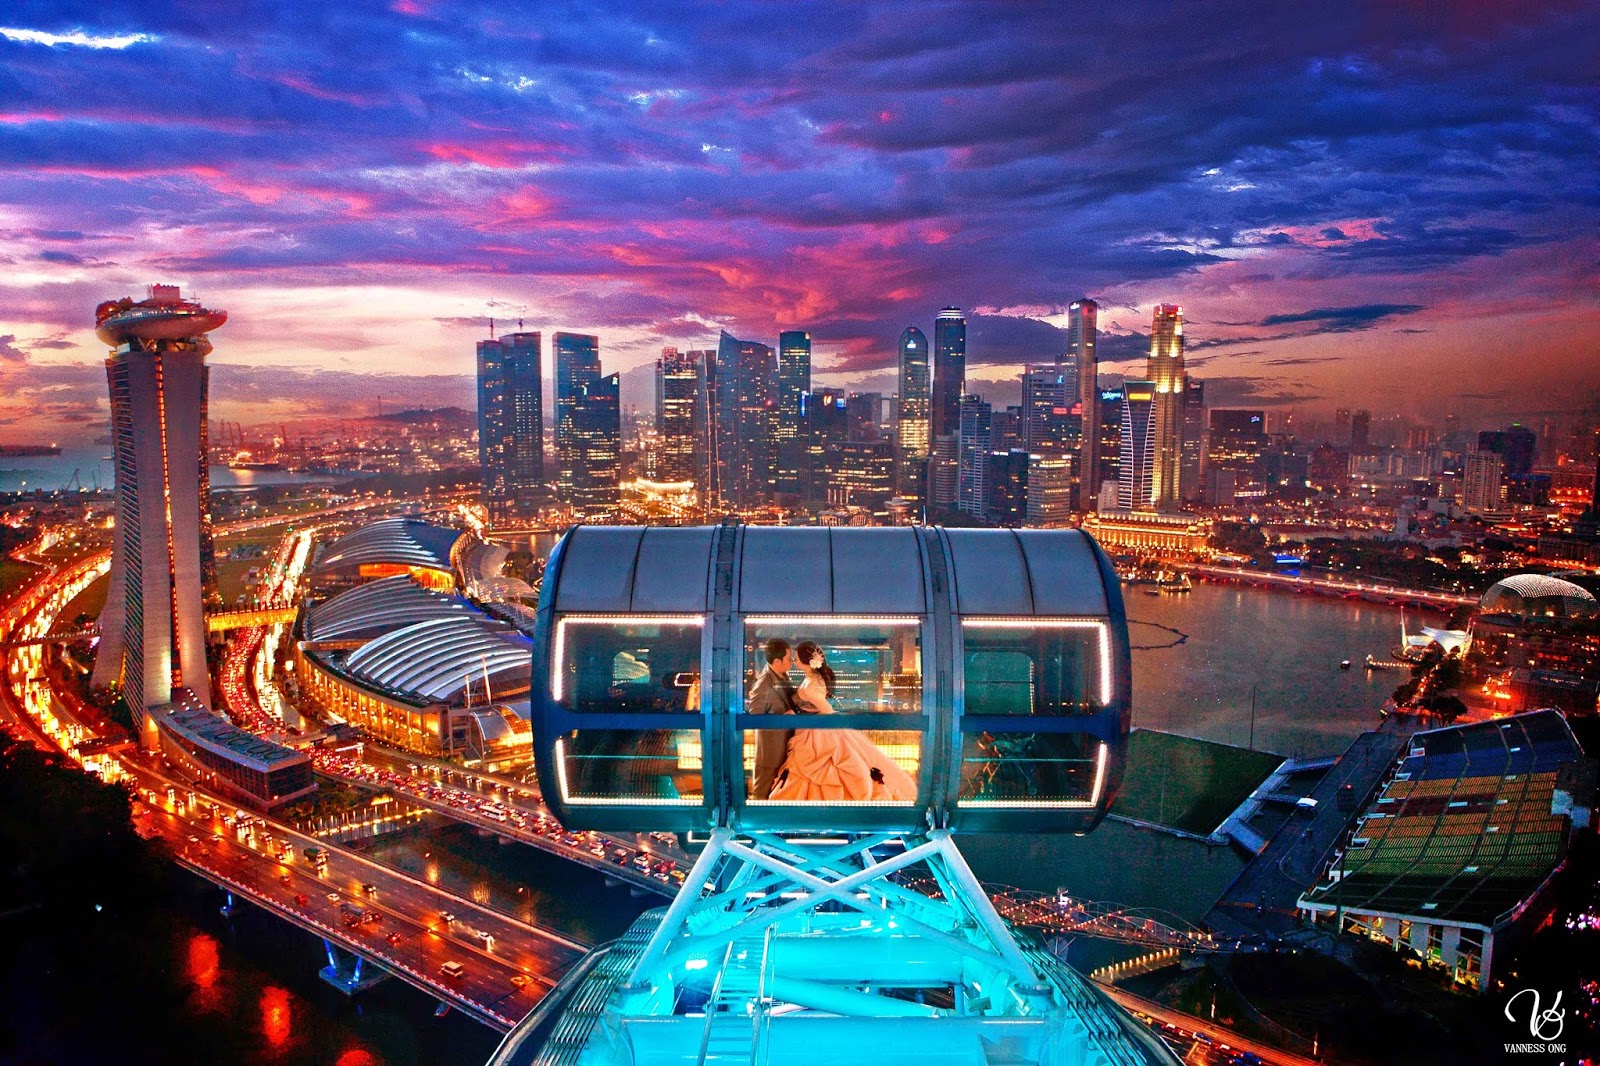 Singapore Flyer Capsule Night View